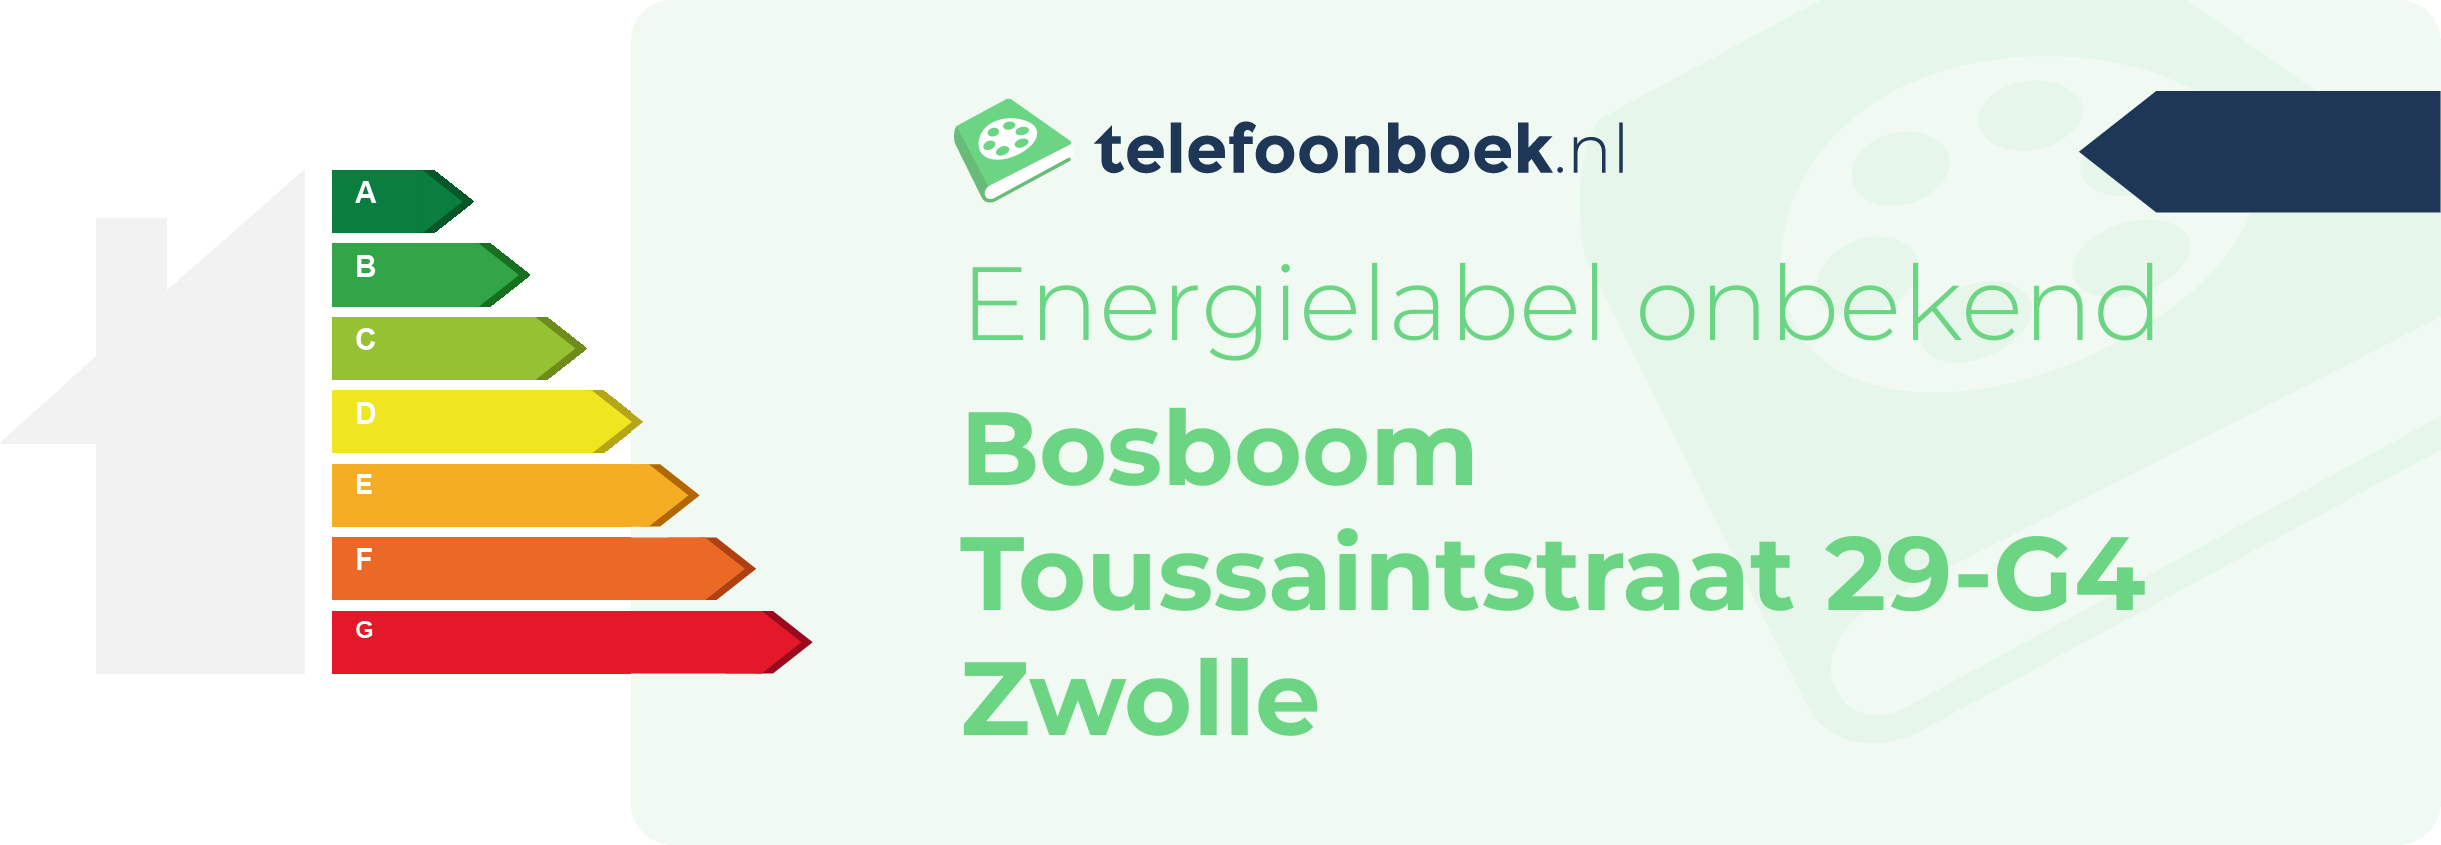 Energielabel Bosboom Toussaintstraat 29-G4 Zwolle